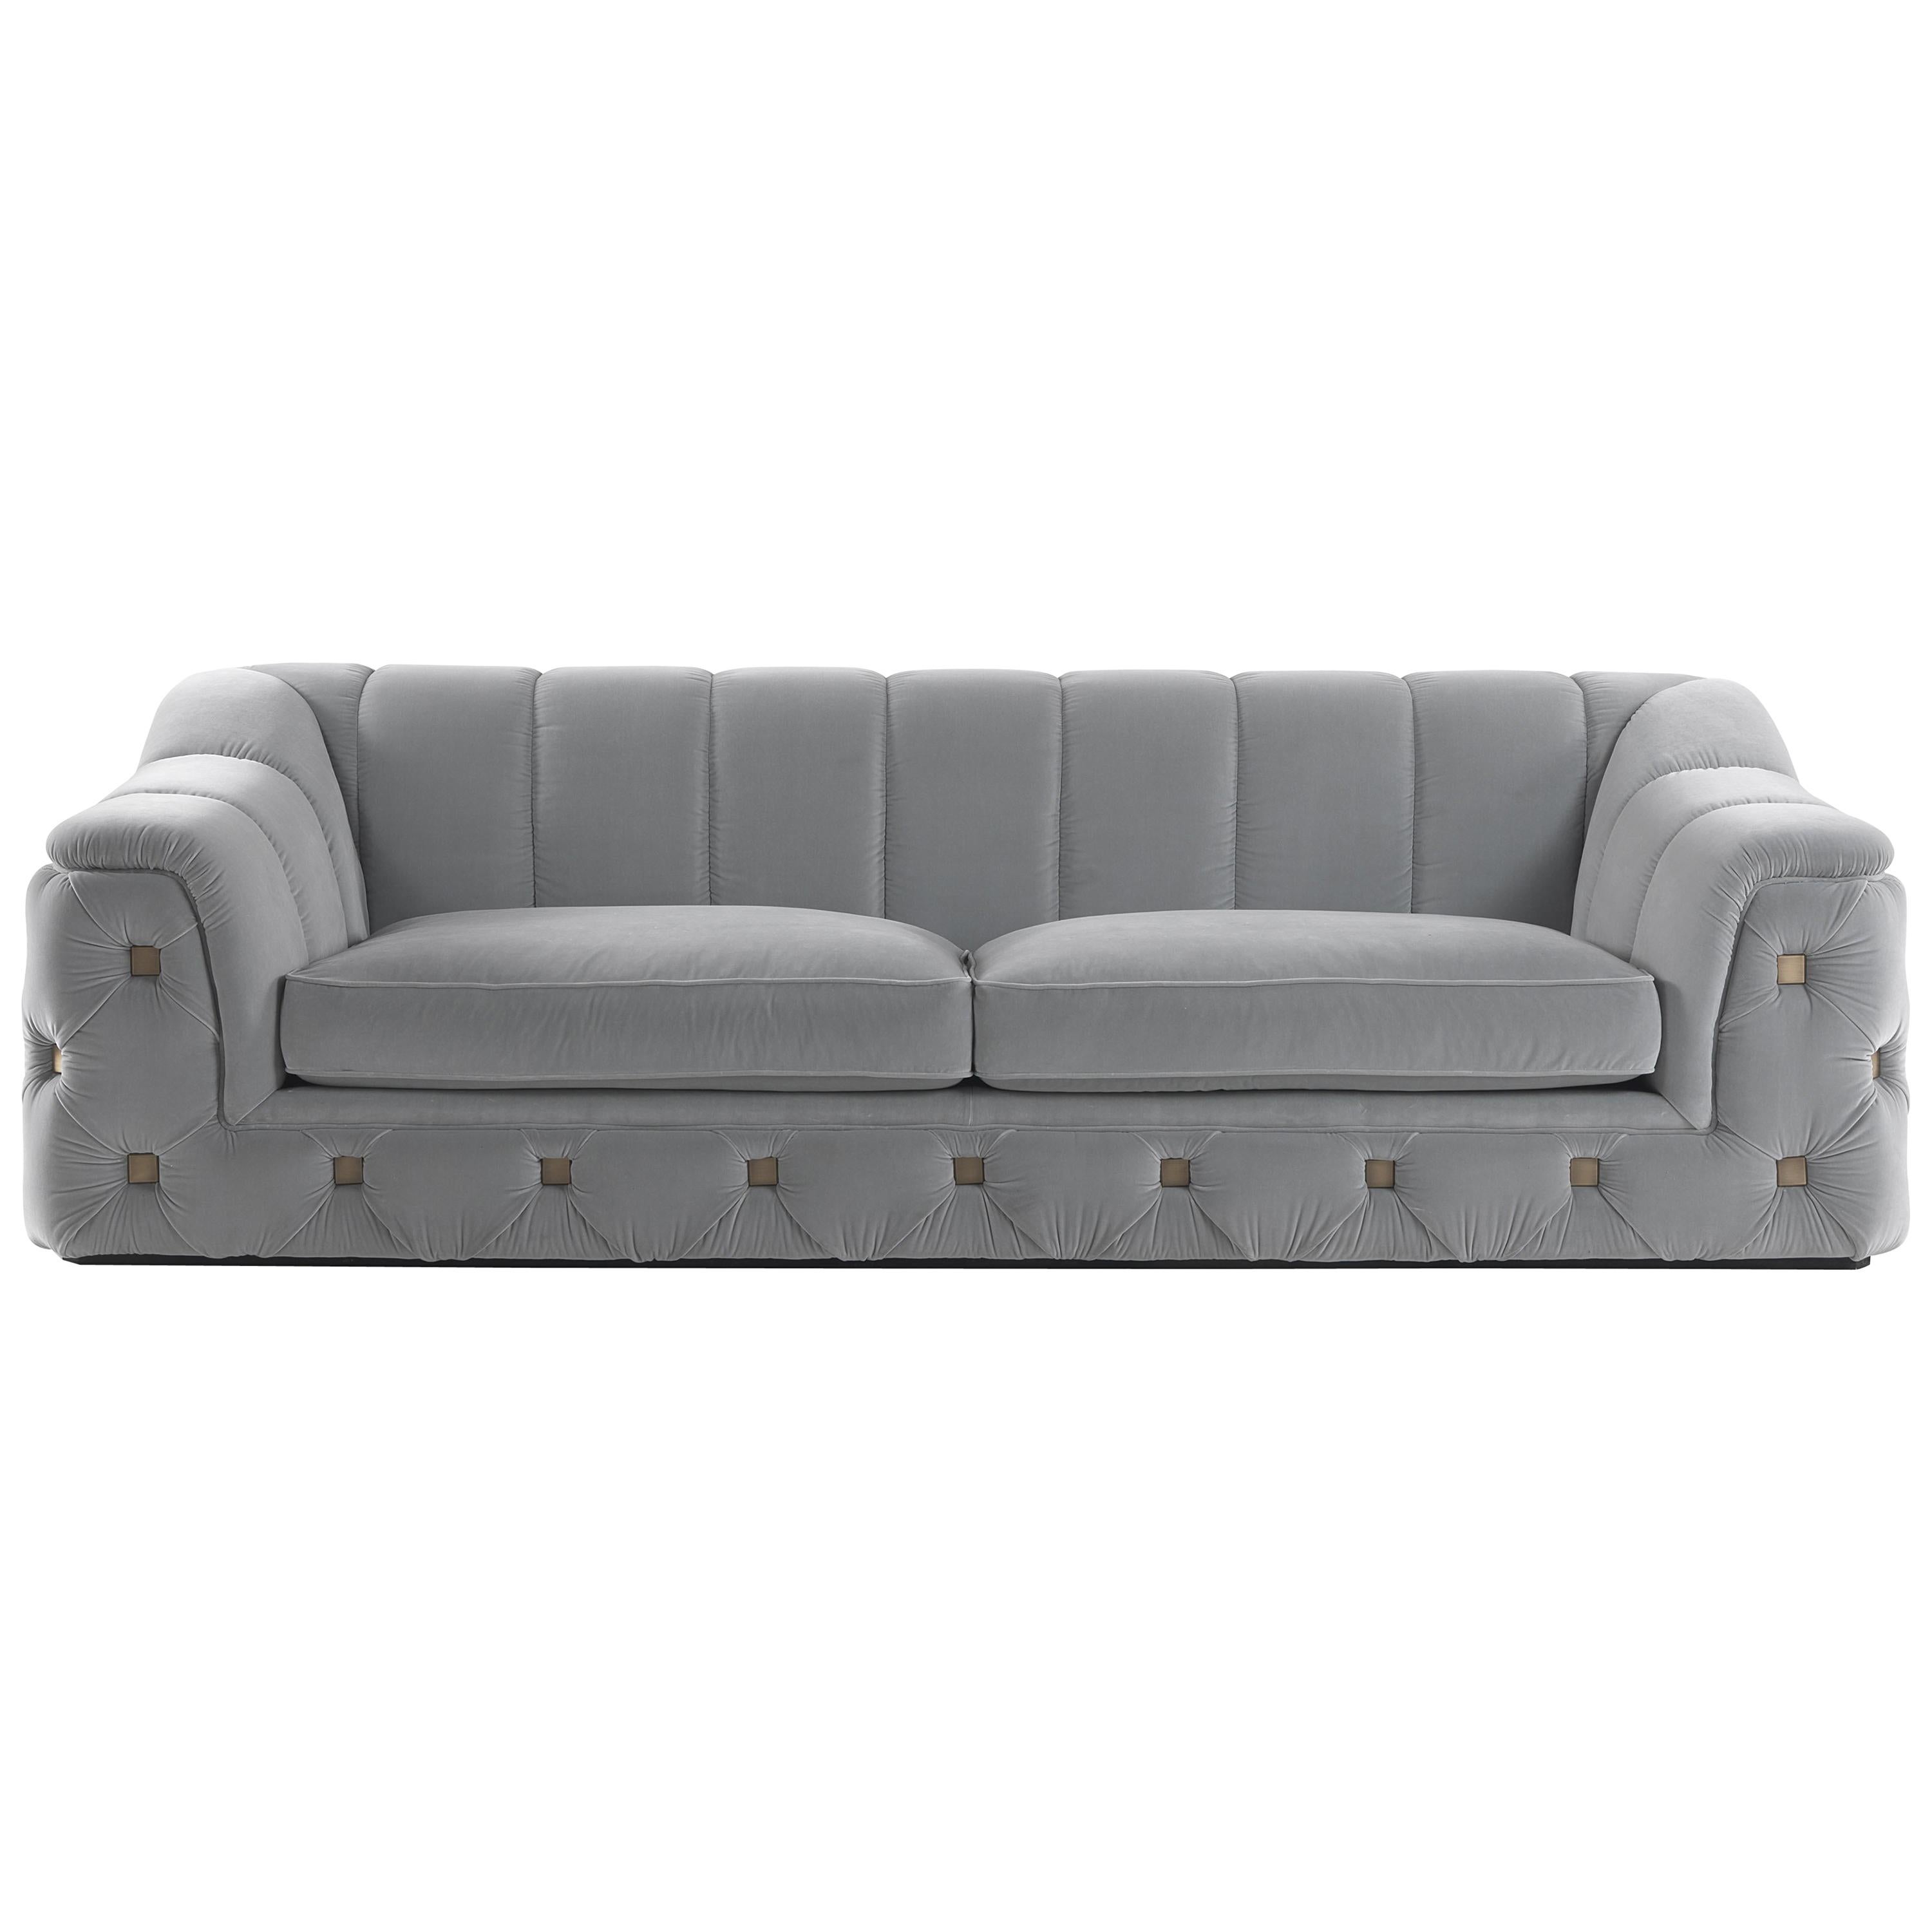 Gianfranco Ferre Hill Three-Seat Sofa in Grey Fabric For Sale